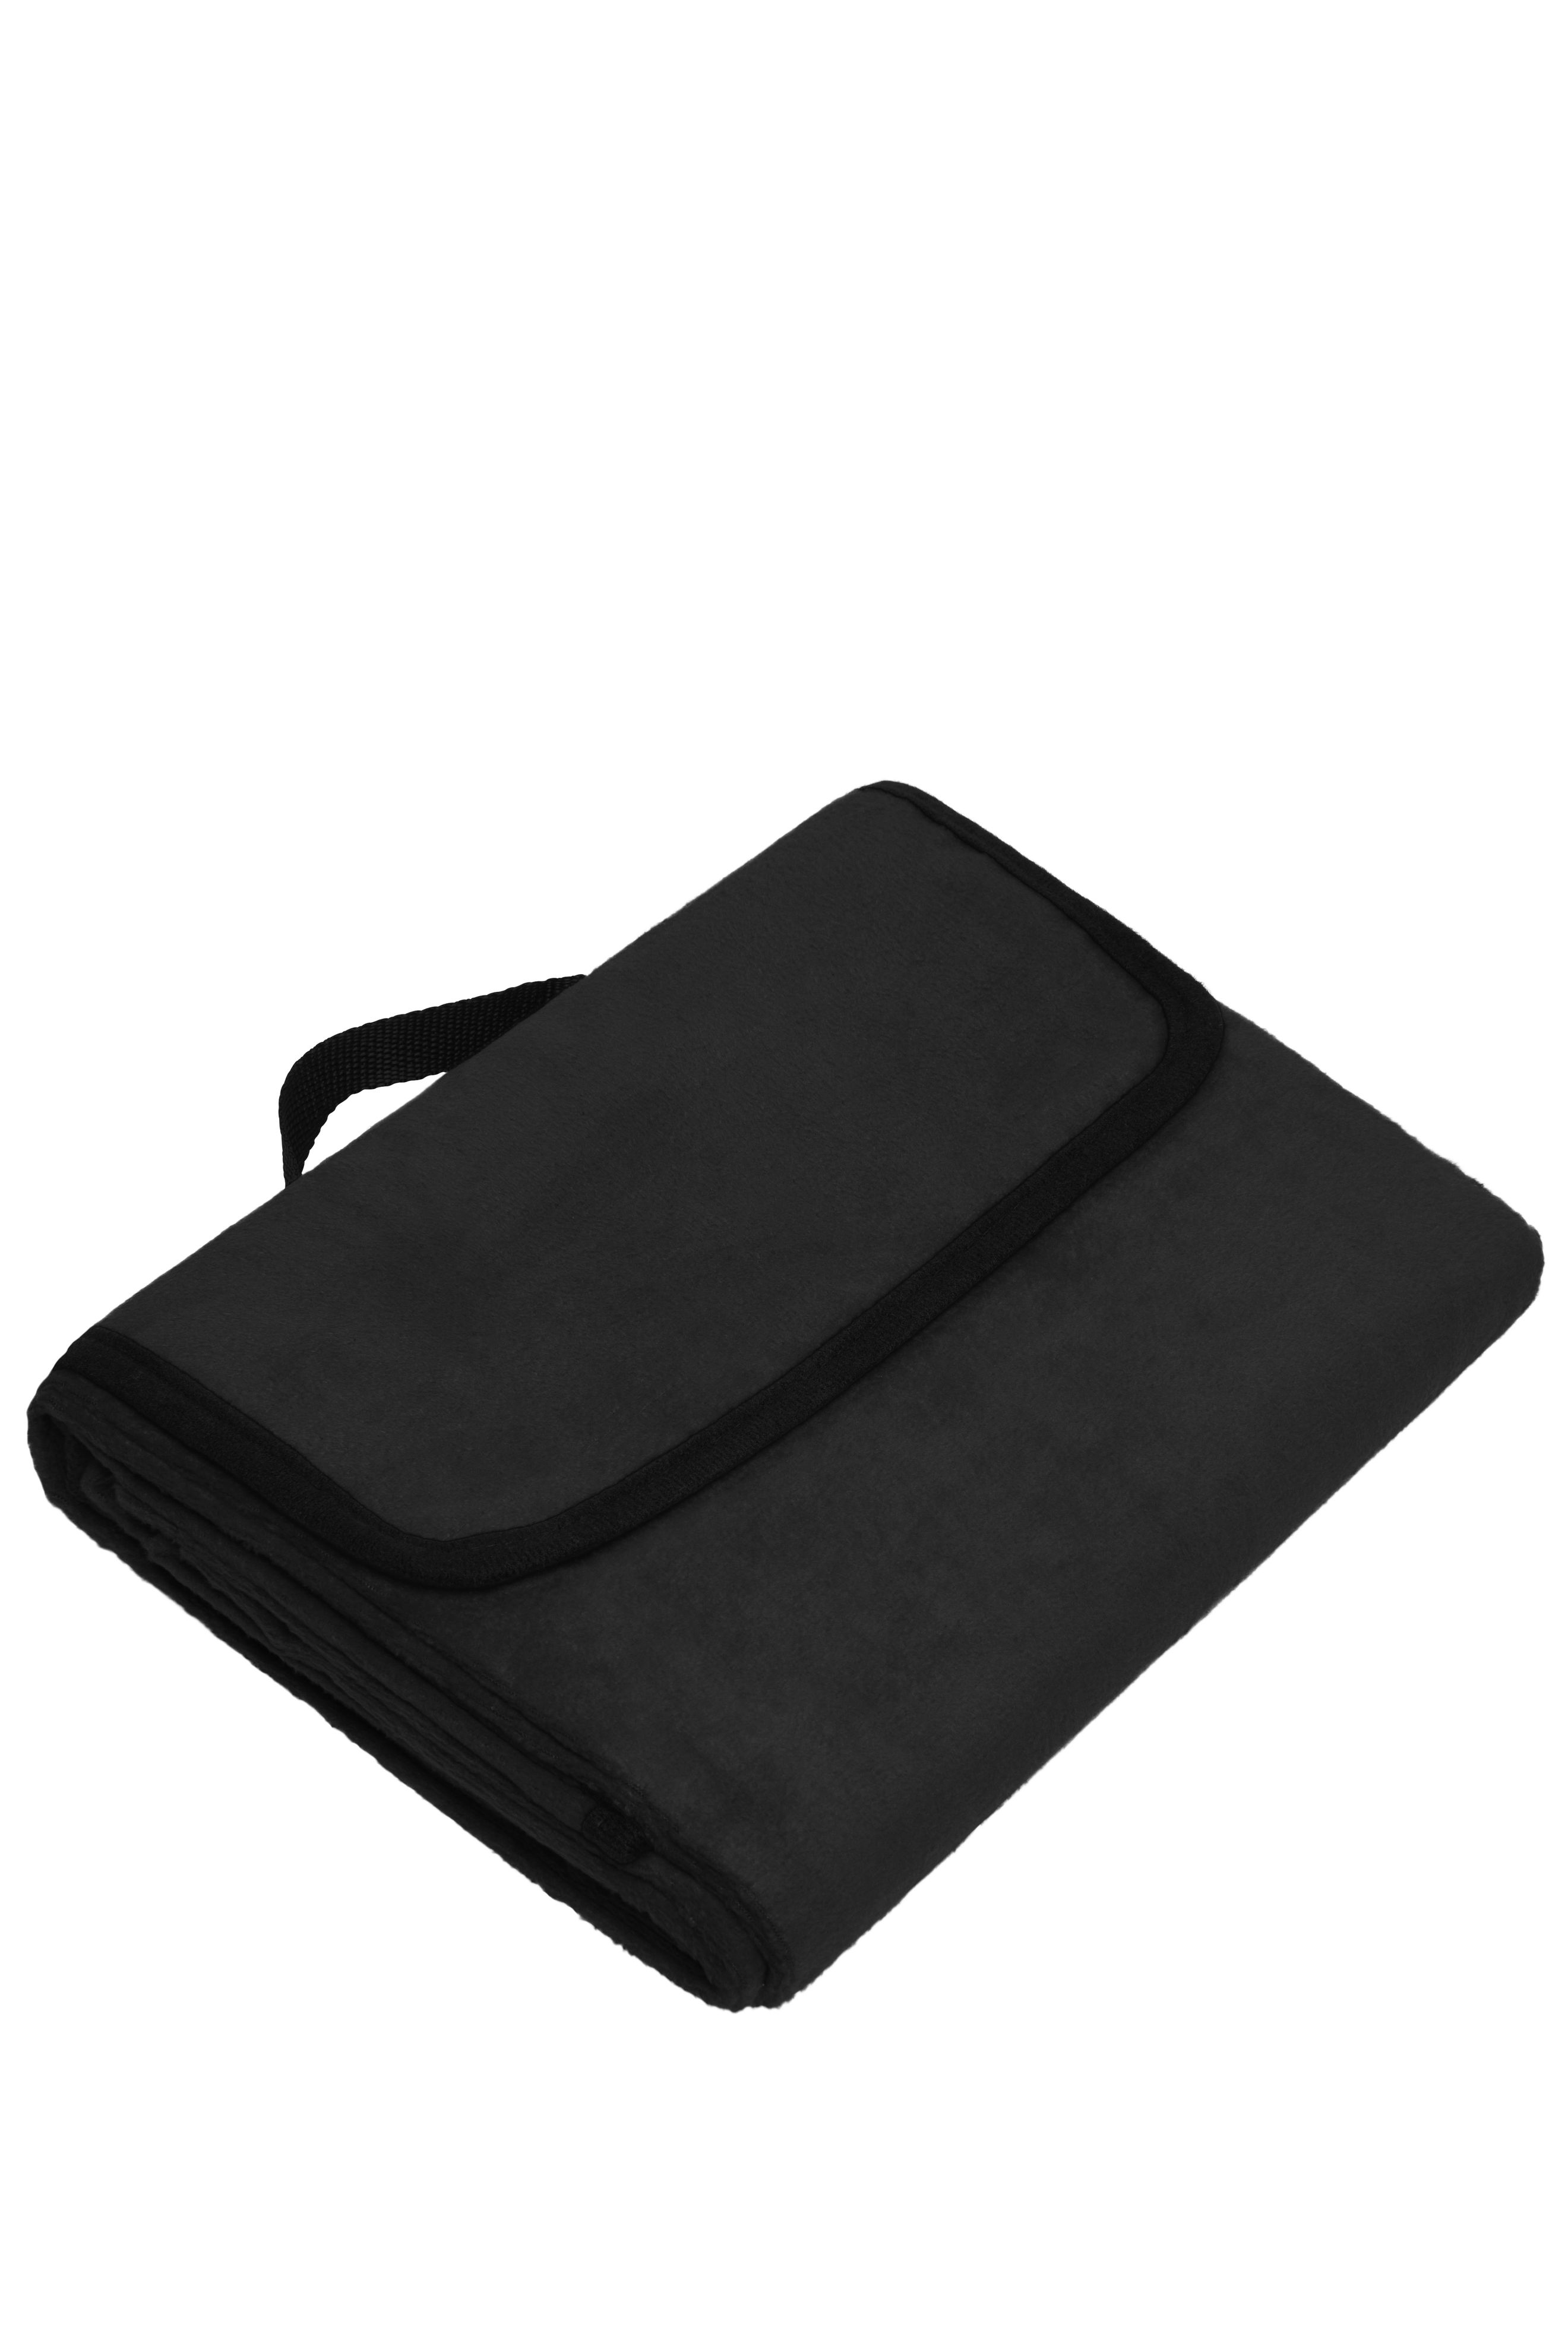 Picnic Blanket JN953 Tragbare Picknickdecke aus weichem Fleece